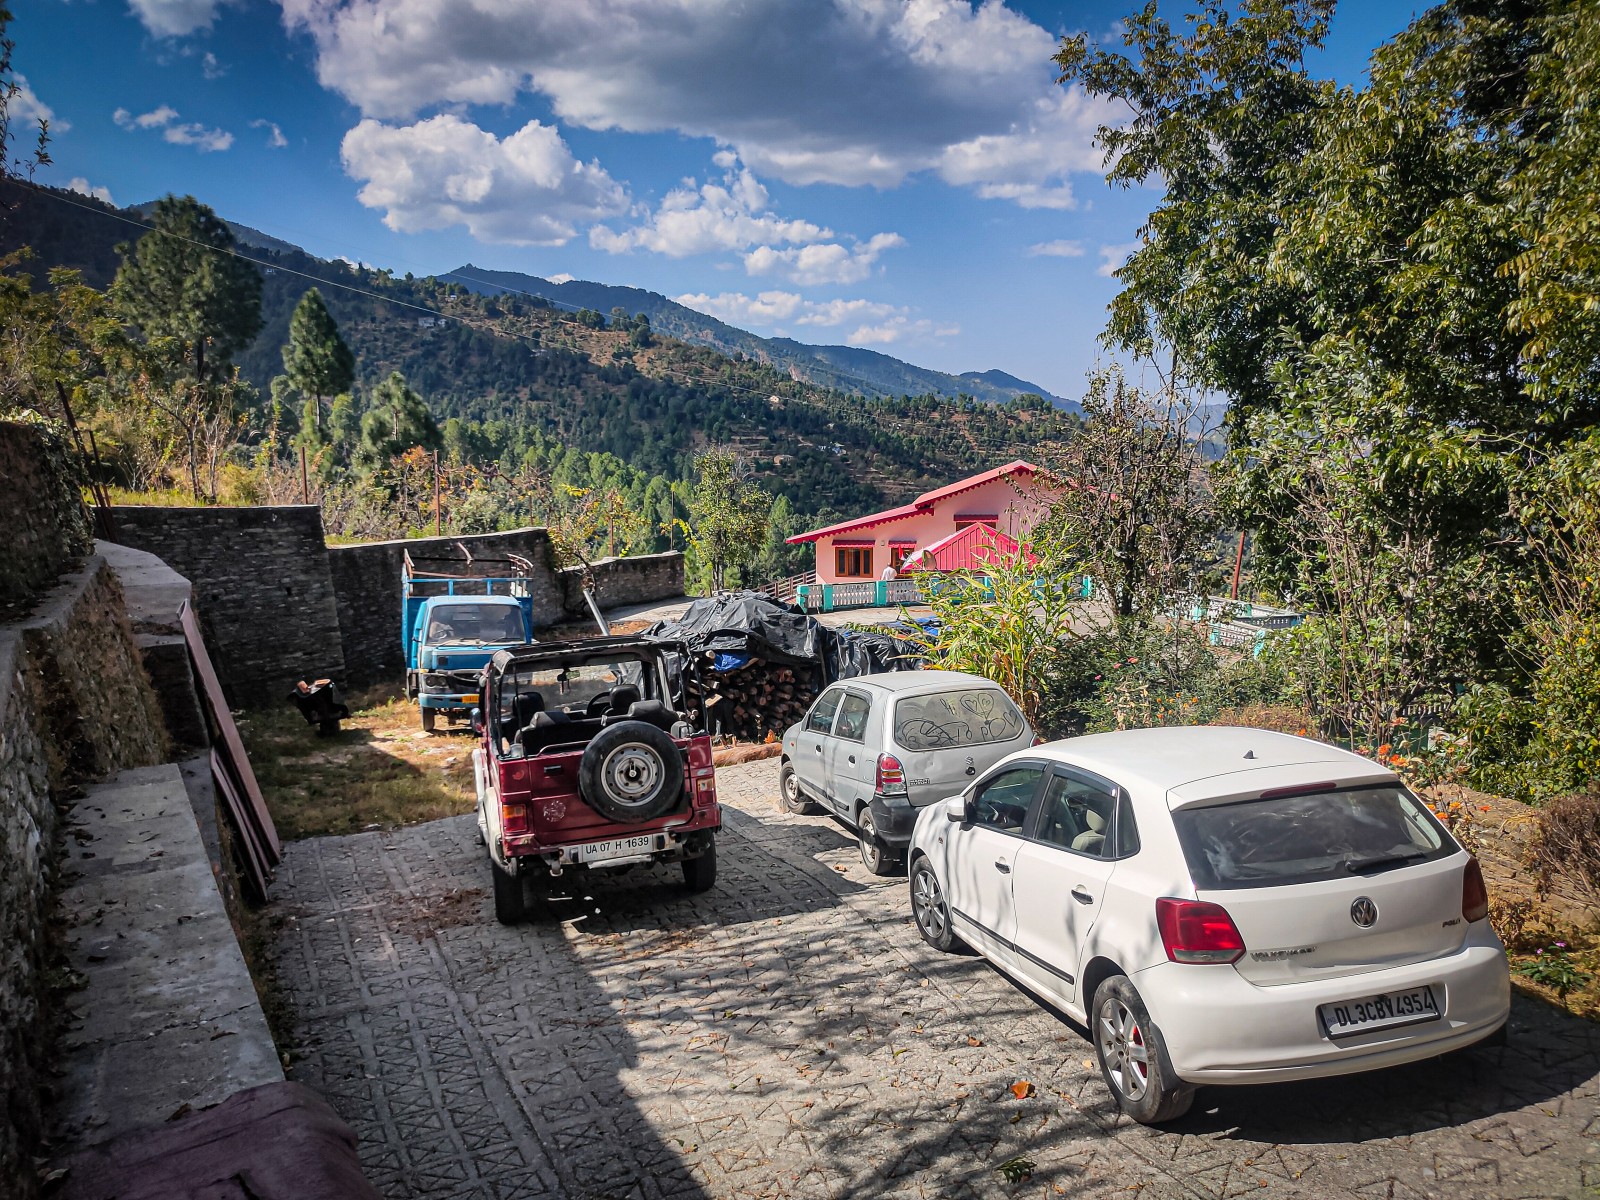 Nathuakhan village, Nainital